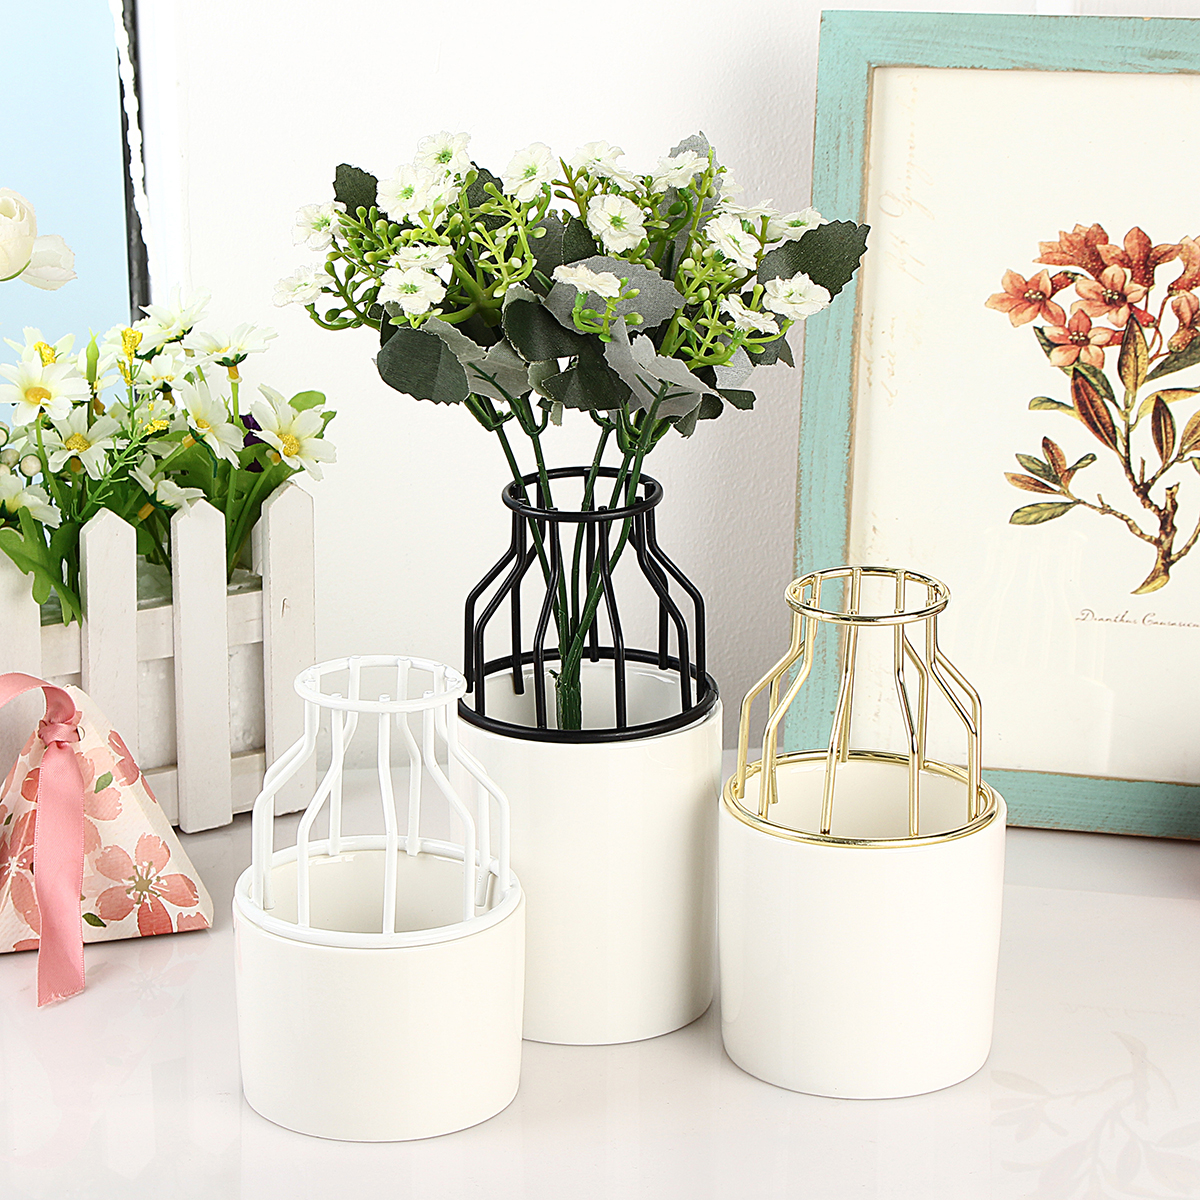 Ceramics-Vase-Simple-Iron-Frame-Hydroponics-Soil-Culture-Green-Radish-Insert-Flower-Pot-1457360-5